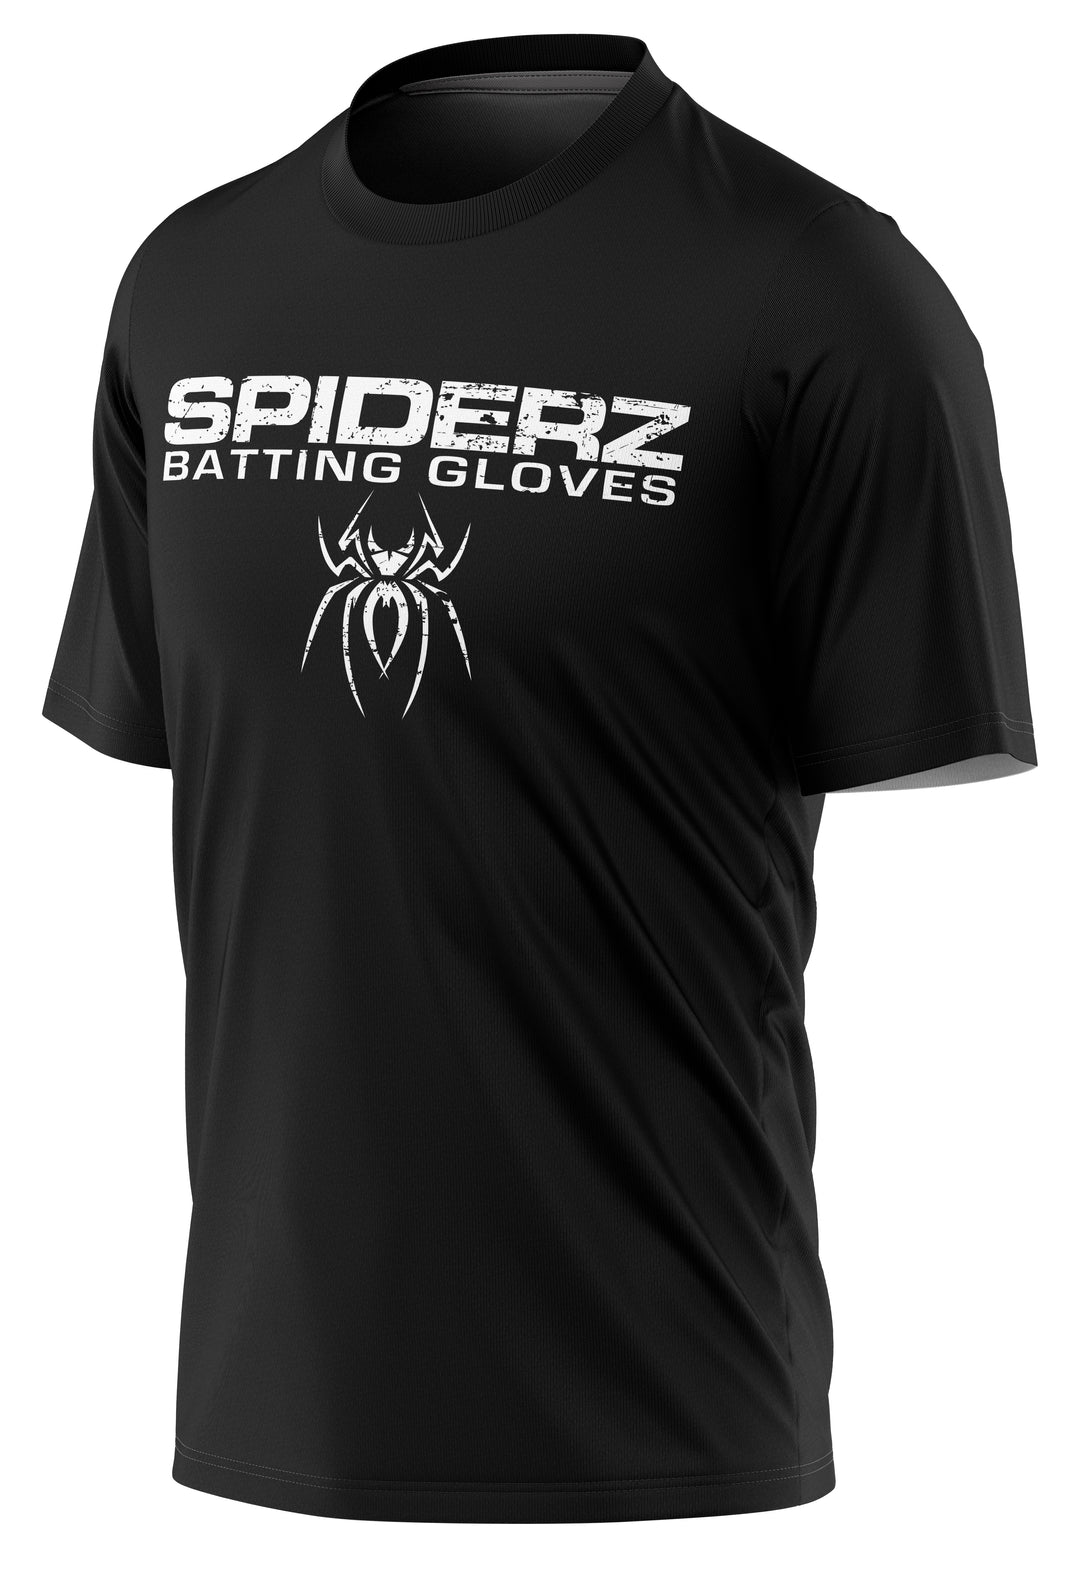 Spiderz Batting Gloves Black/White "OG" Premium T-Shirt